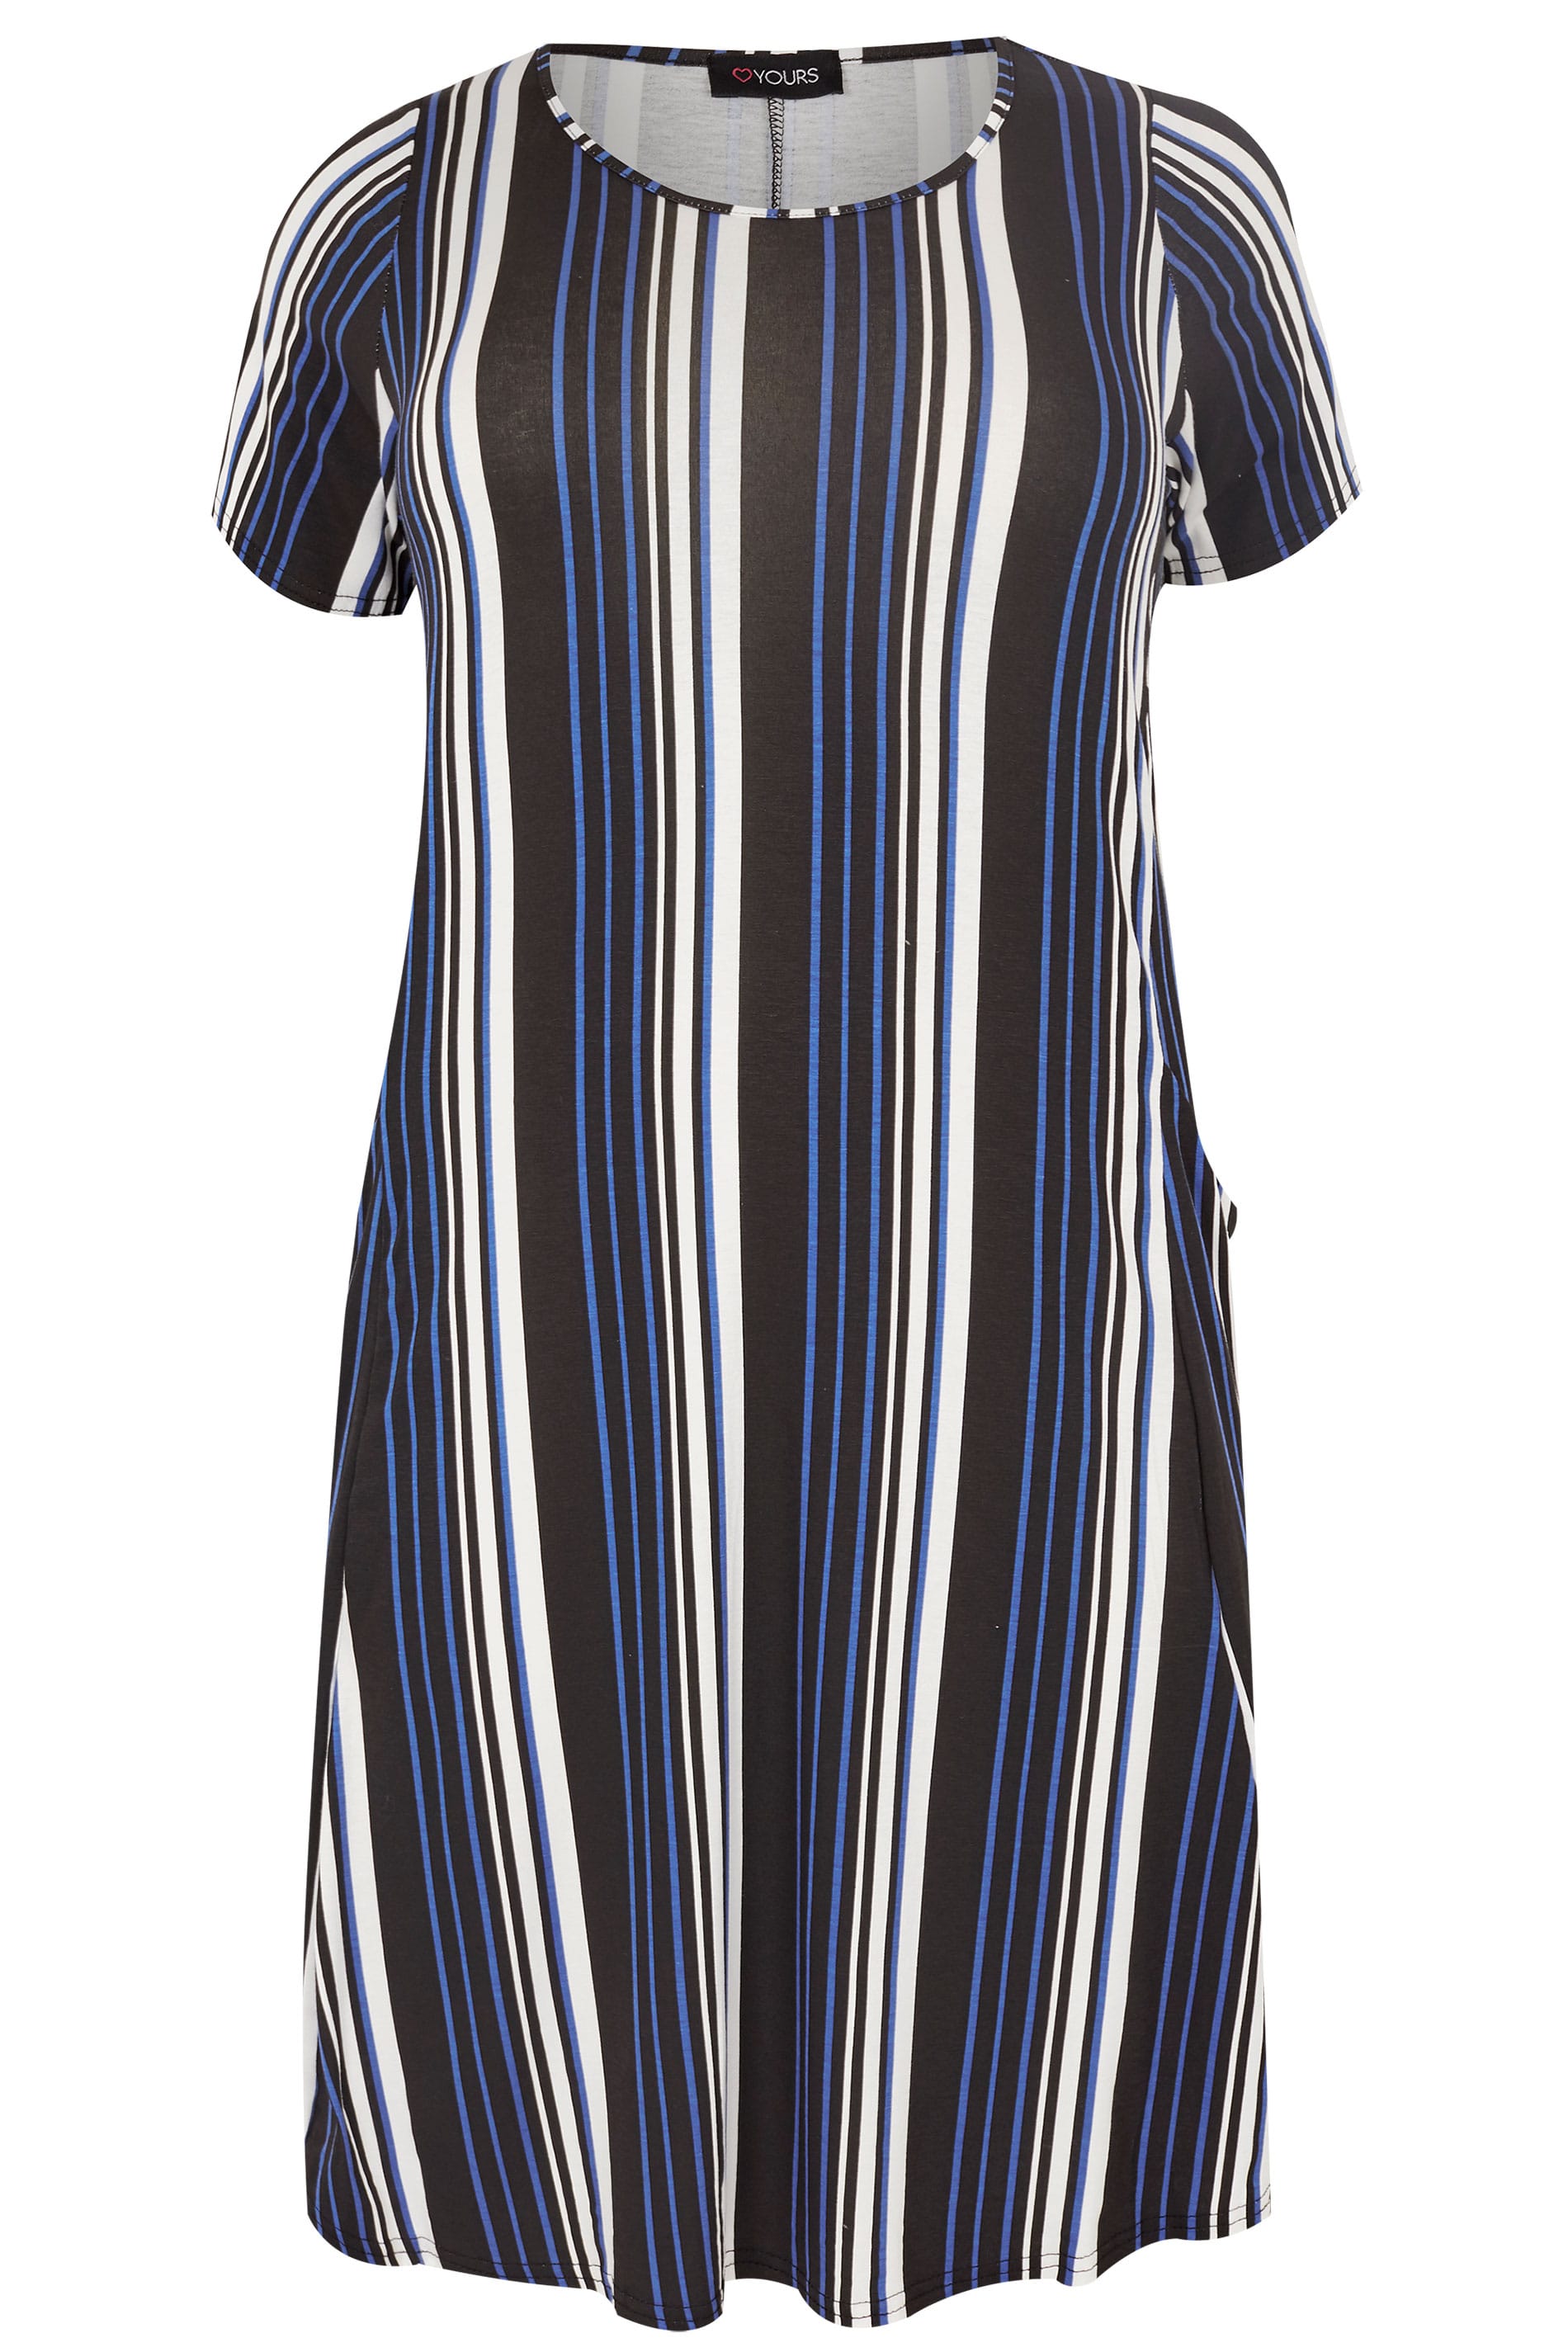 Cobalt Blue Striped Drape Pocket Dress, plus size 16 to 36